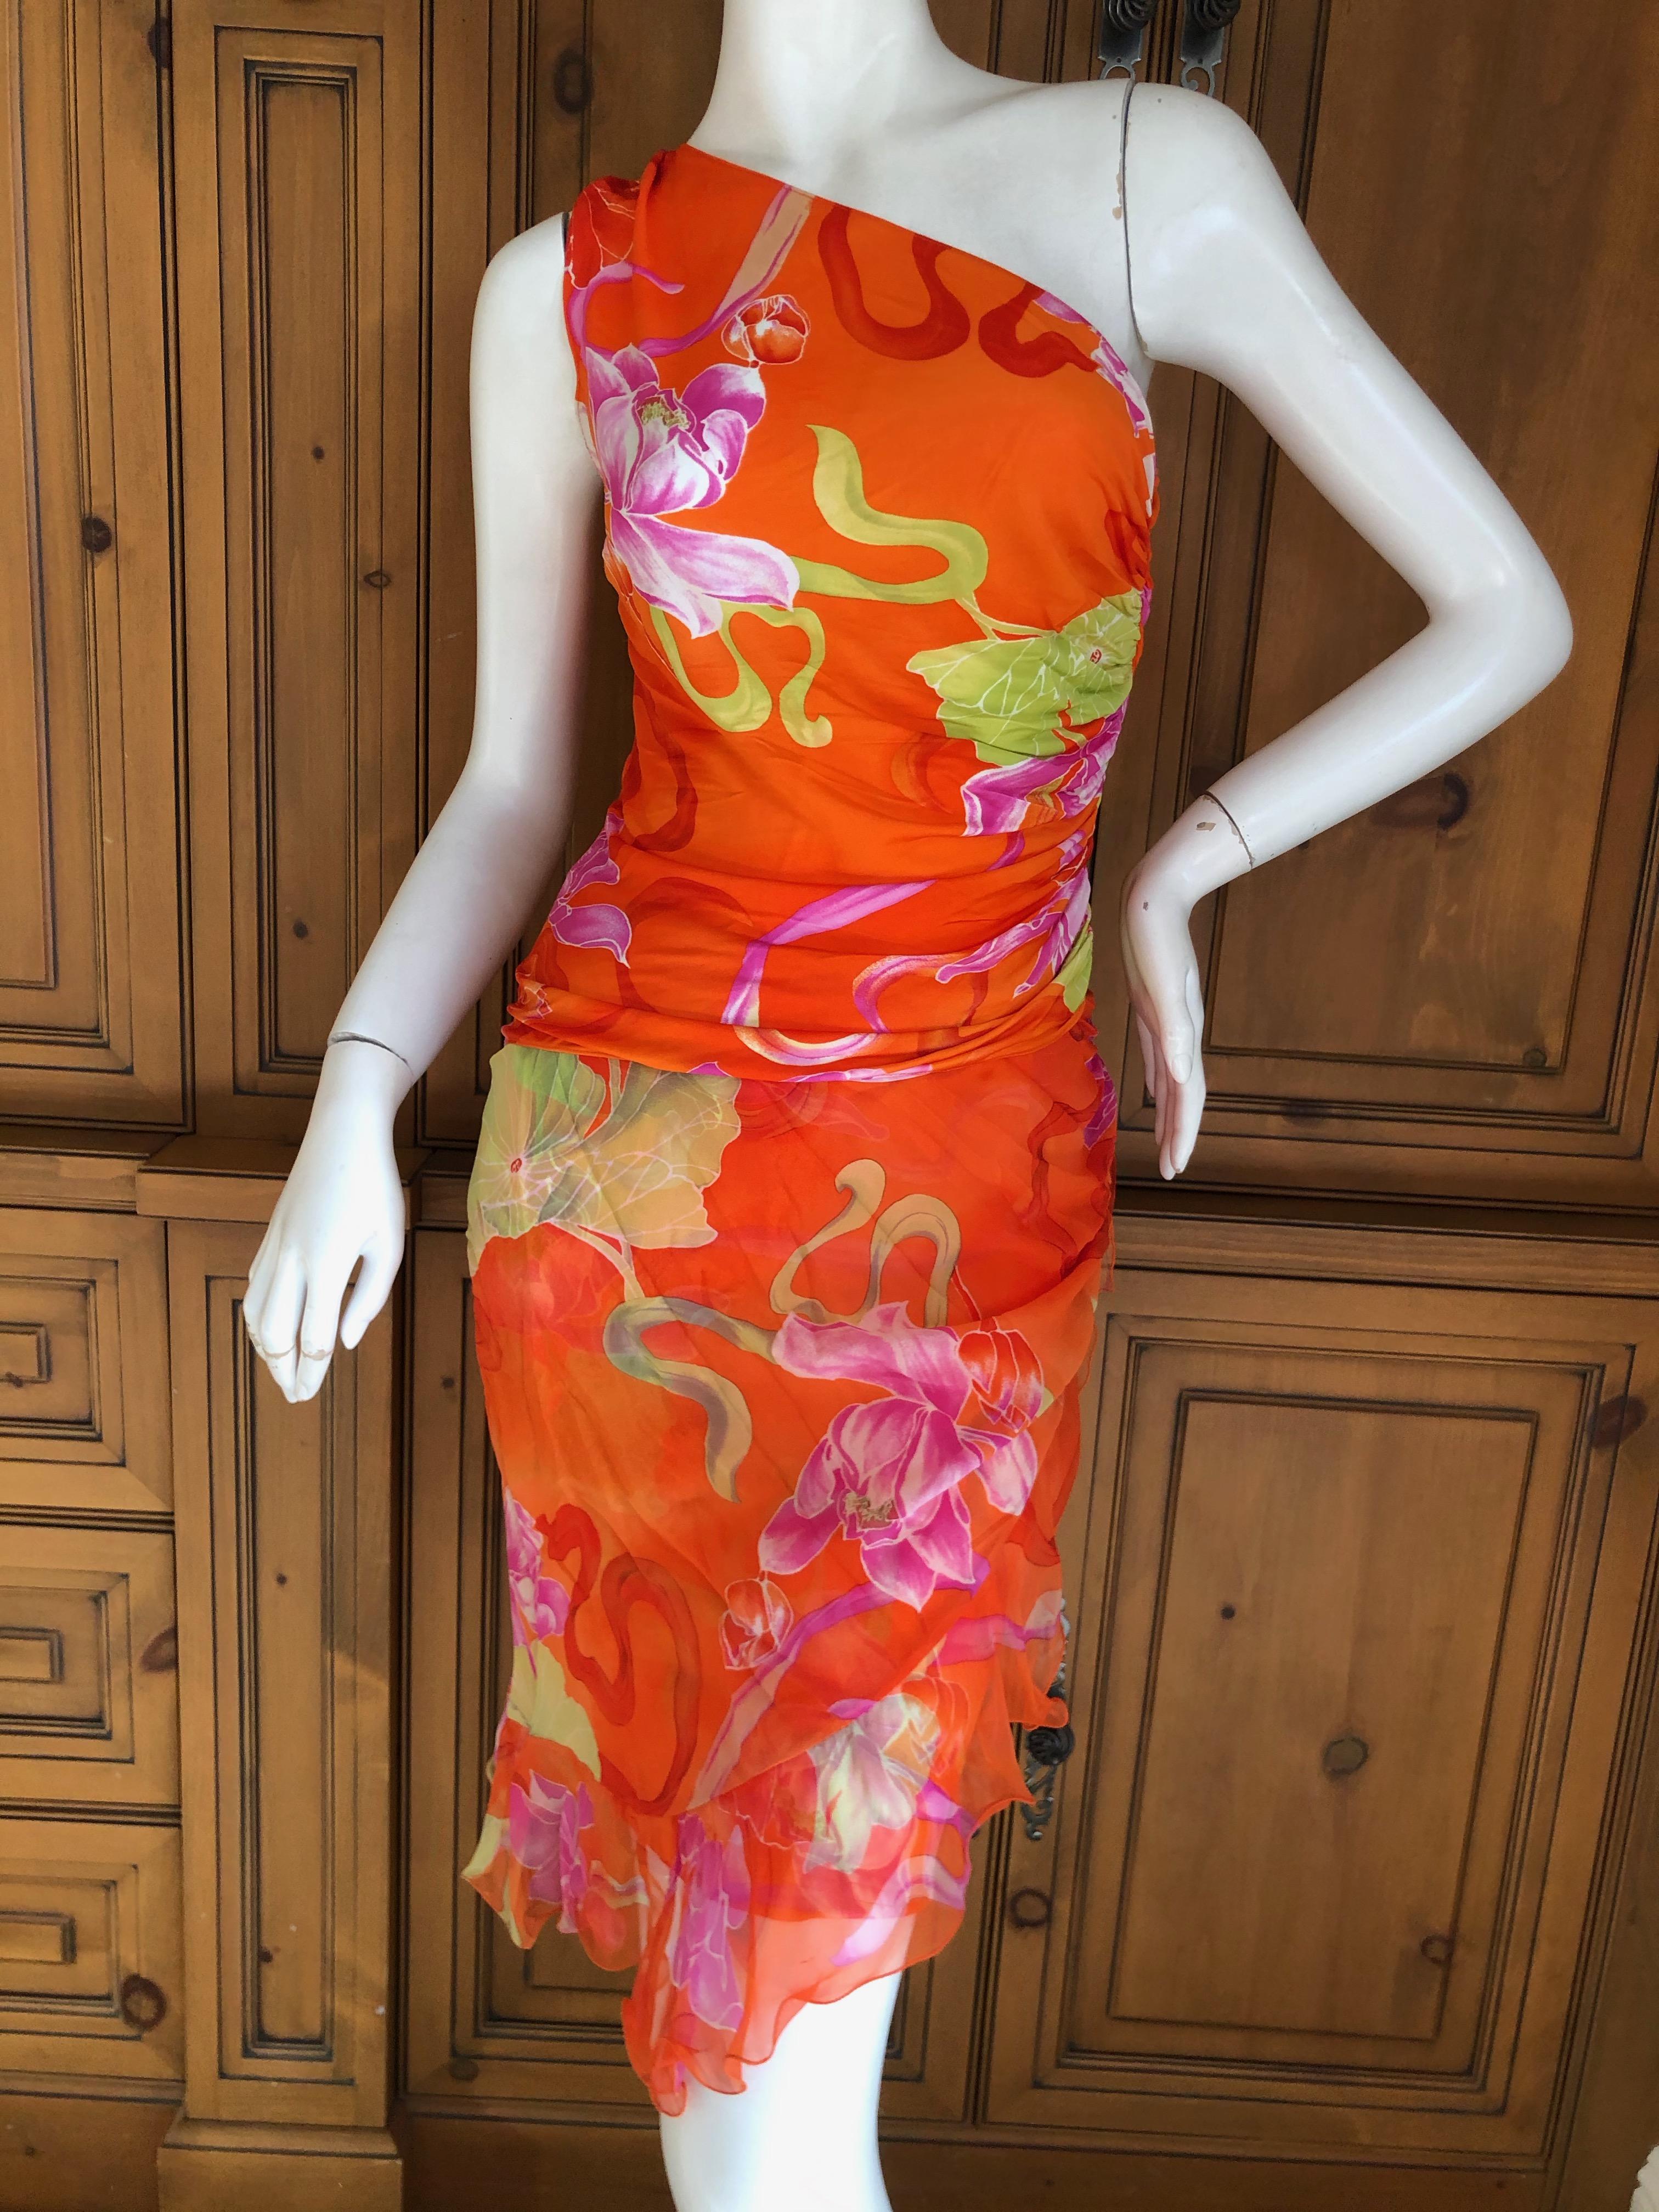 Red Emanuel Ungaro 3 Piece Silk Floral One Shoulder Dress w Shawl by Peter Dundas For Sale